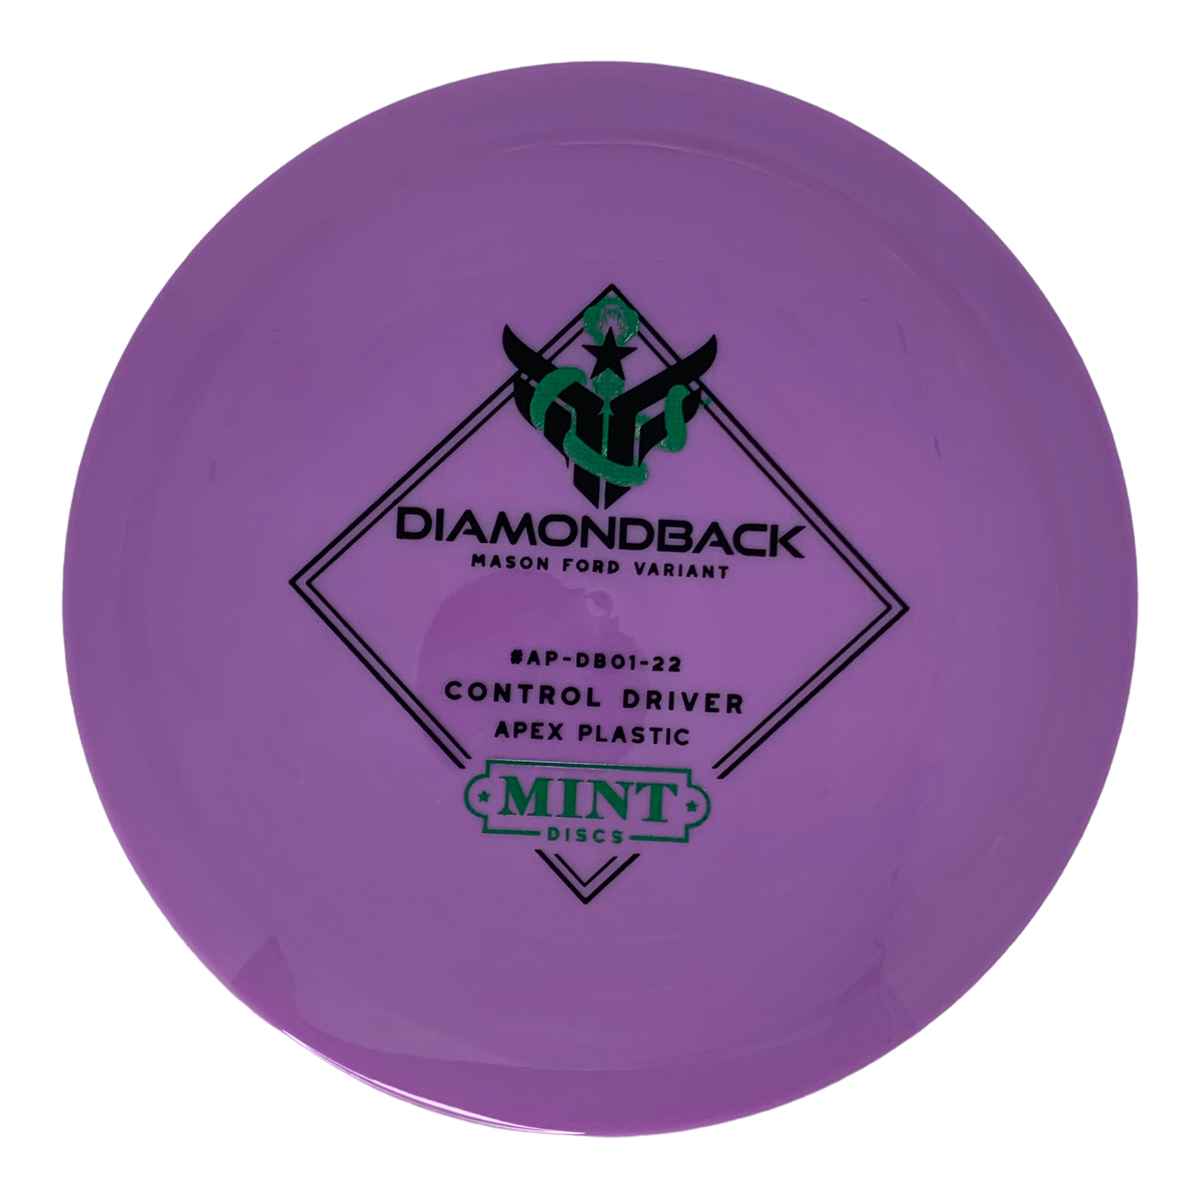 Mint Discs Apex Diamondback - Mason Ford Variant